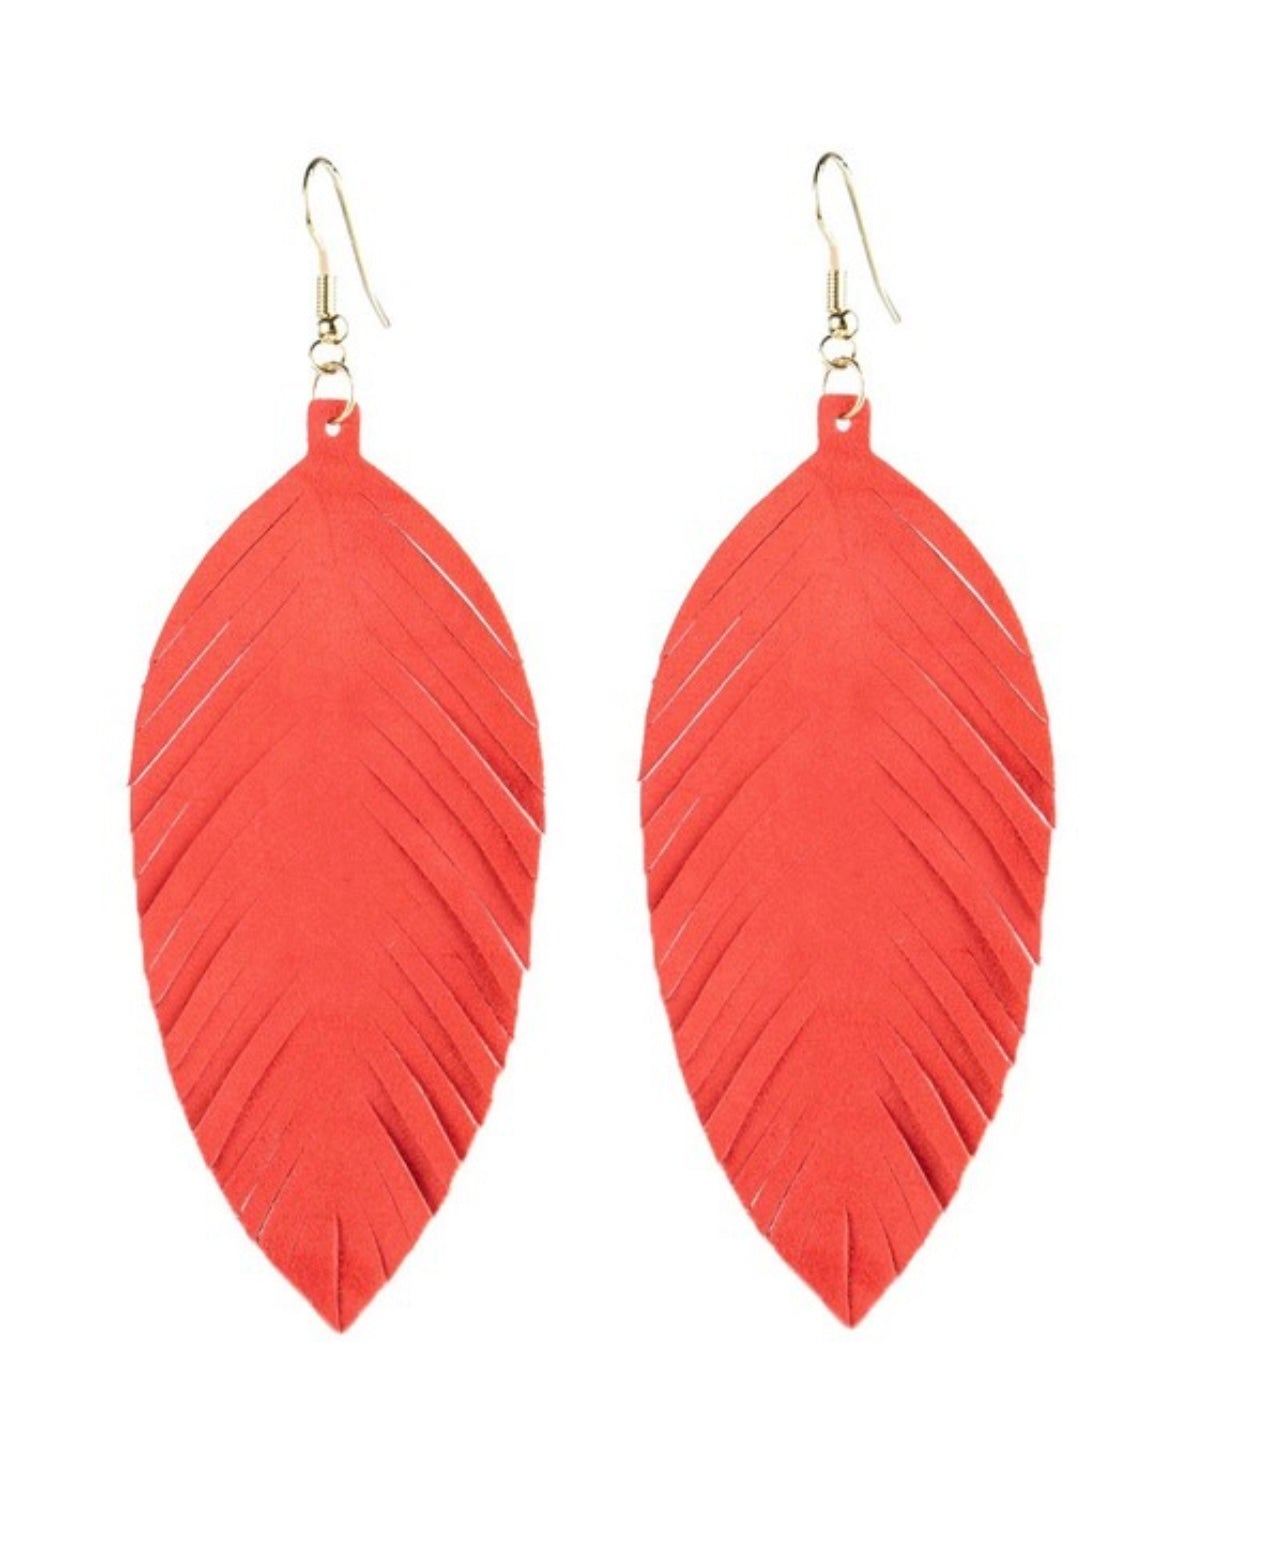 RESTOCKED - Pink Feather Earrings